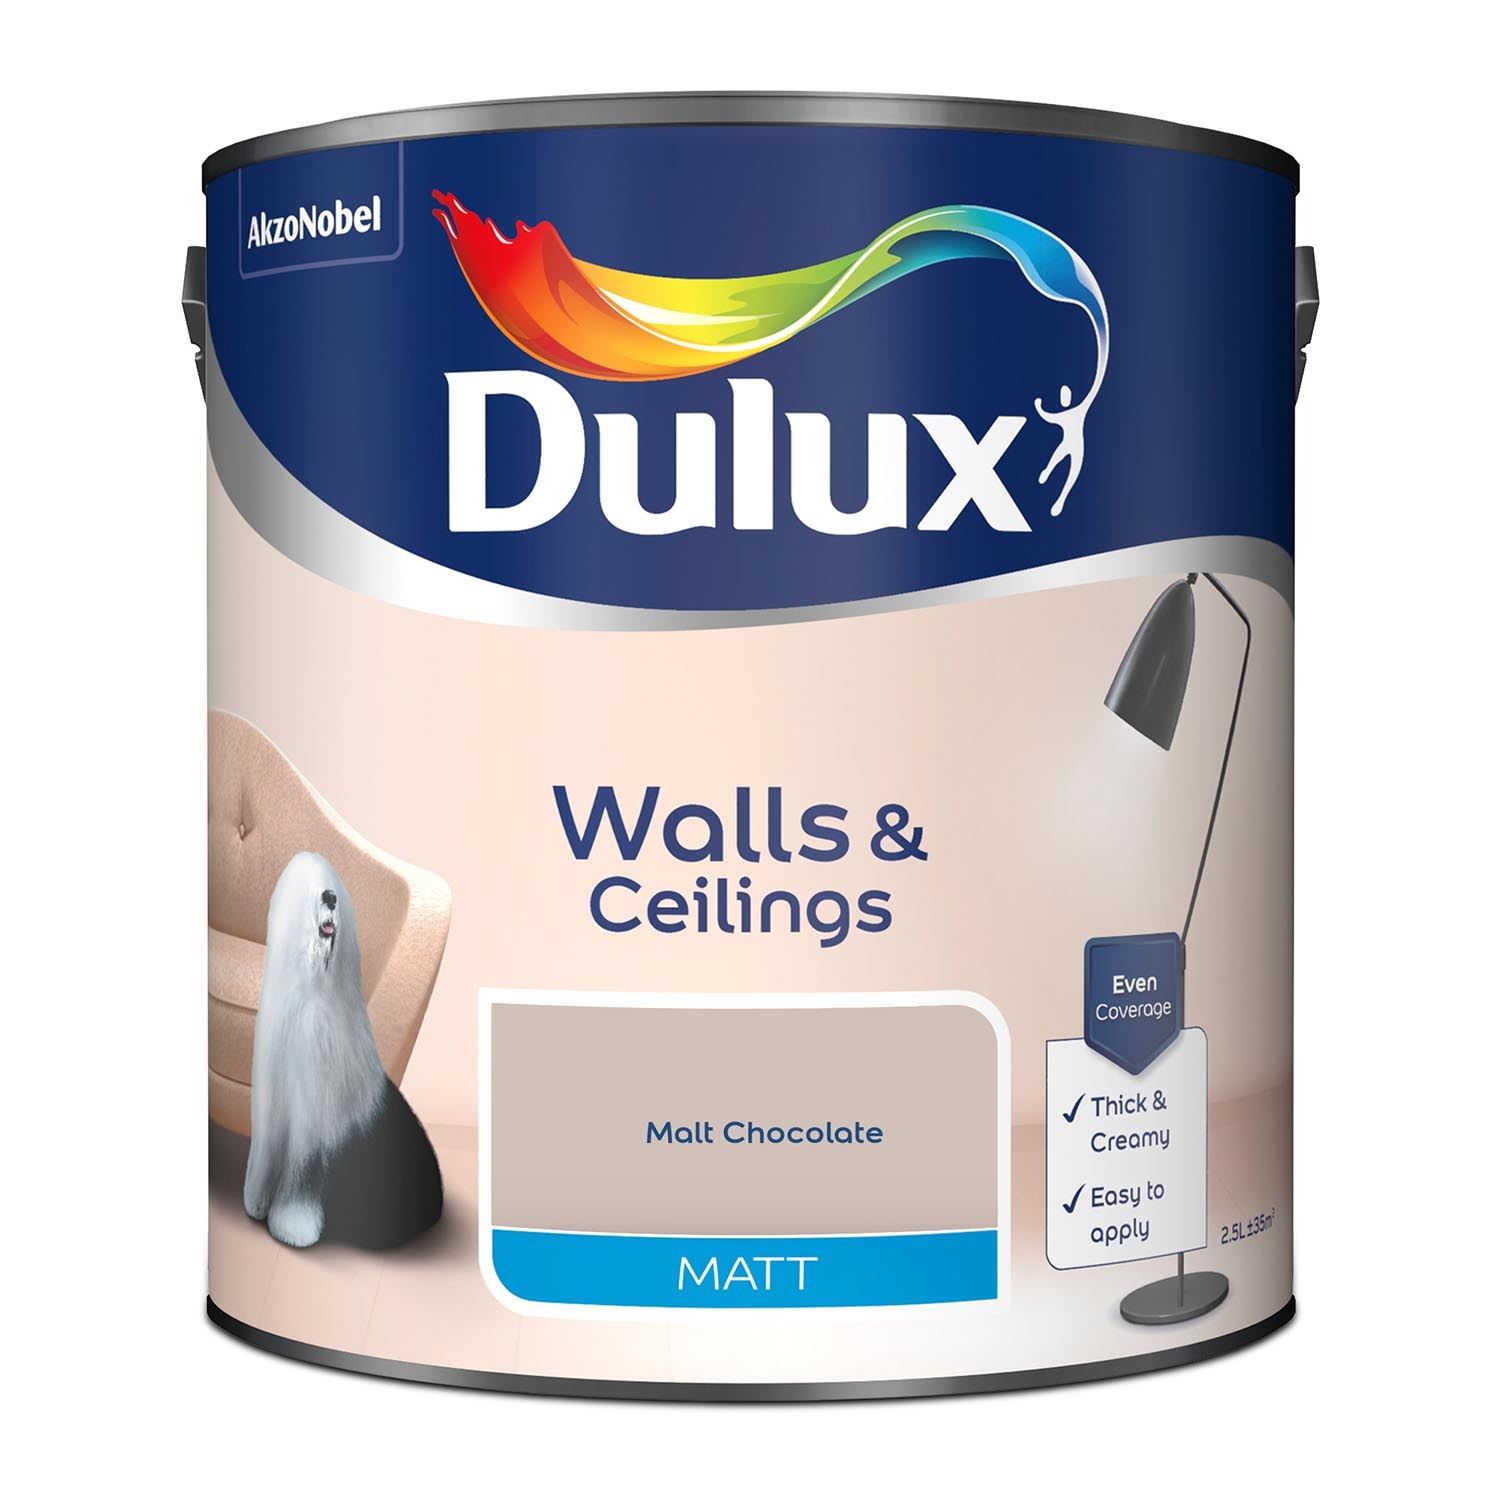 Dulux Walls and Ceilings Malt Chocolate Matt Emulsion Paint 2.5L Image 2